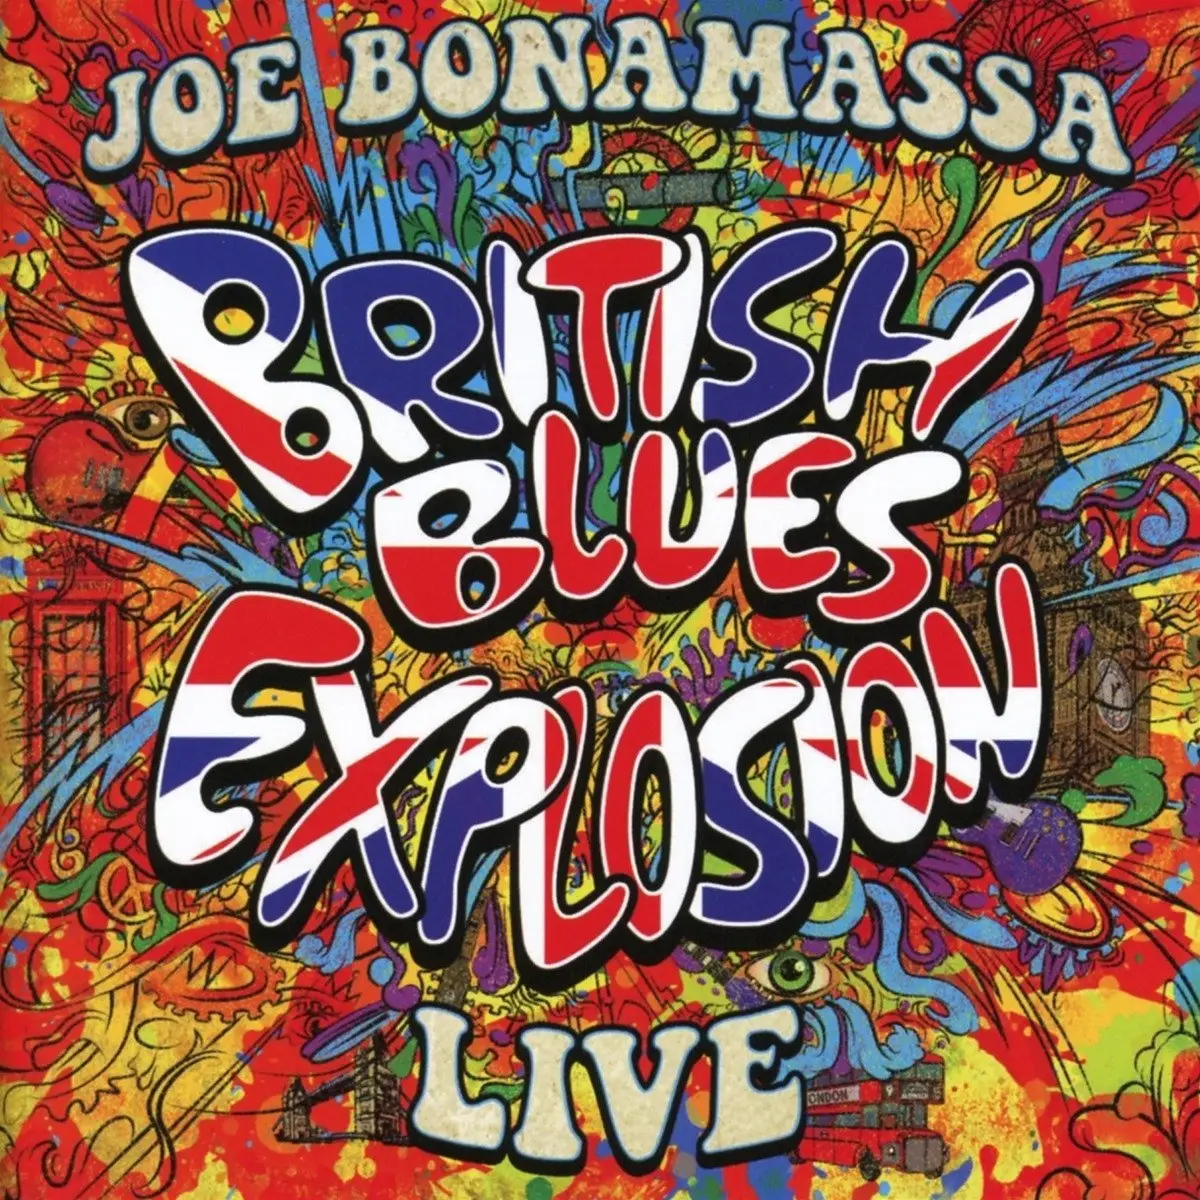 British Blues Explosion Live - Joe Bonamassa, CD pas cher Amazon